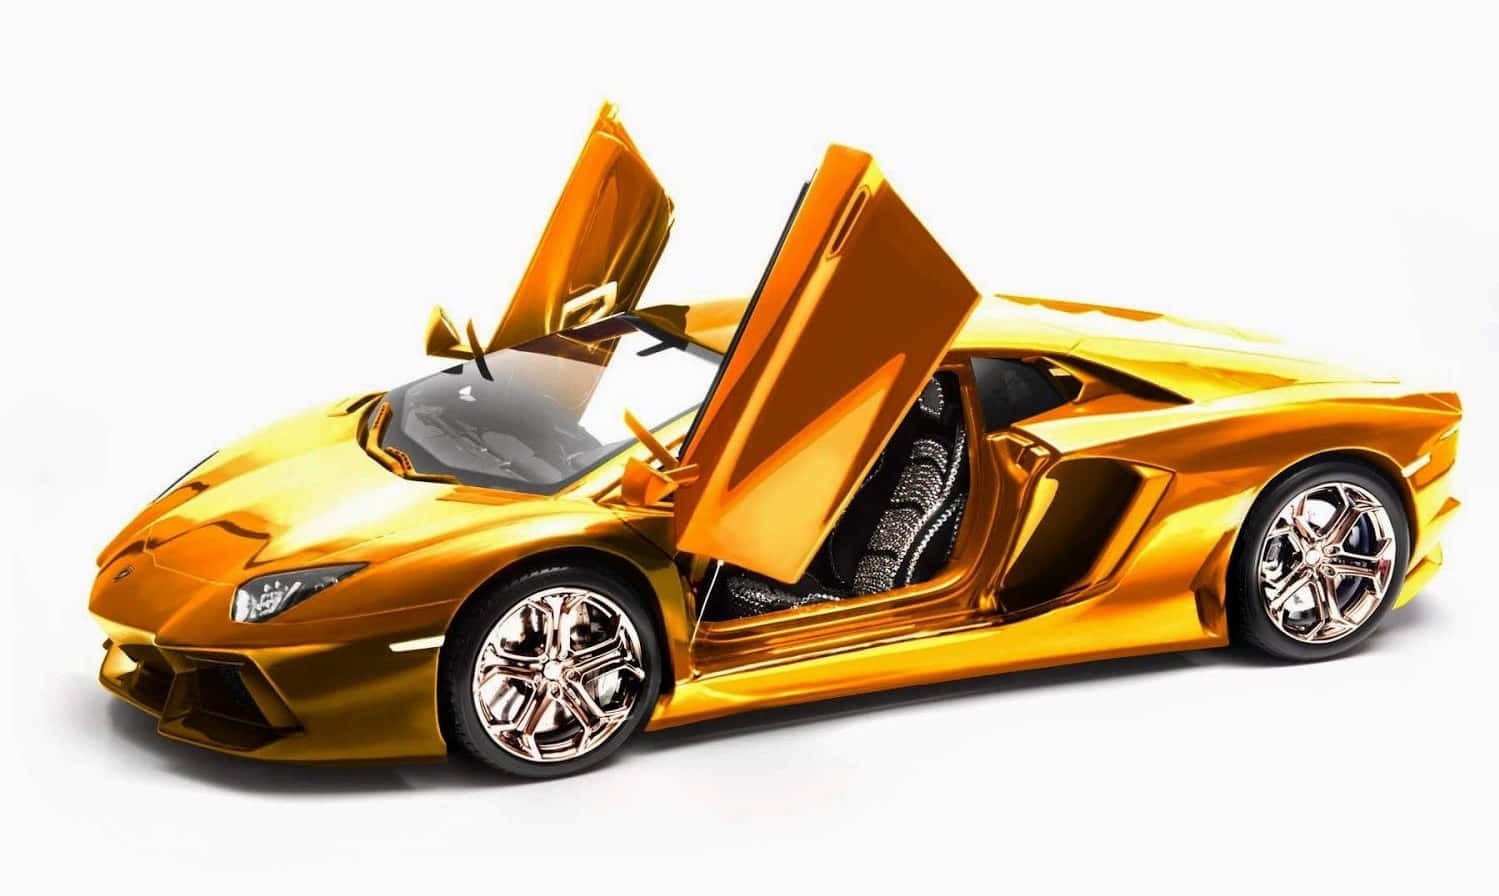 “Stunning gold Lamborghini supercar.” Wallpaper